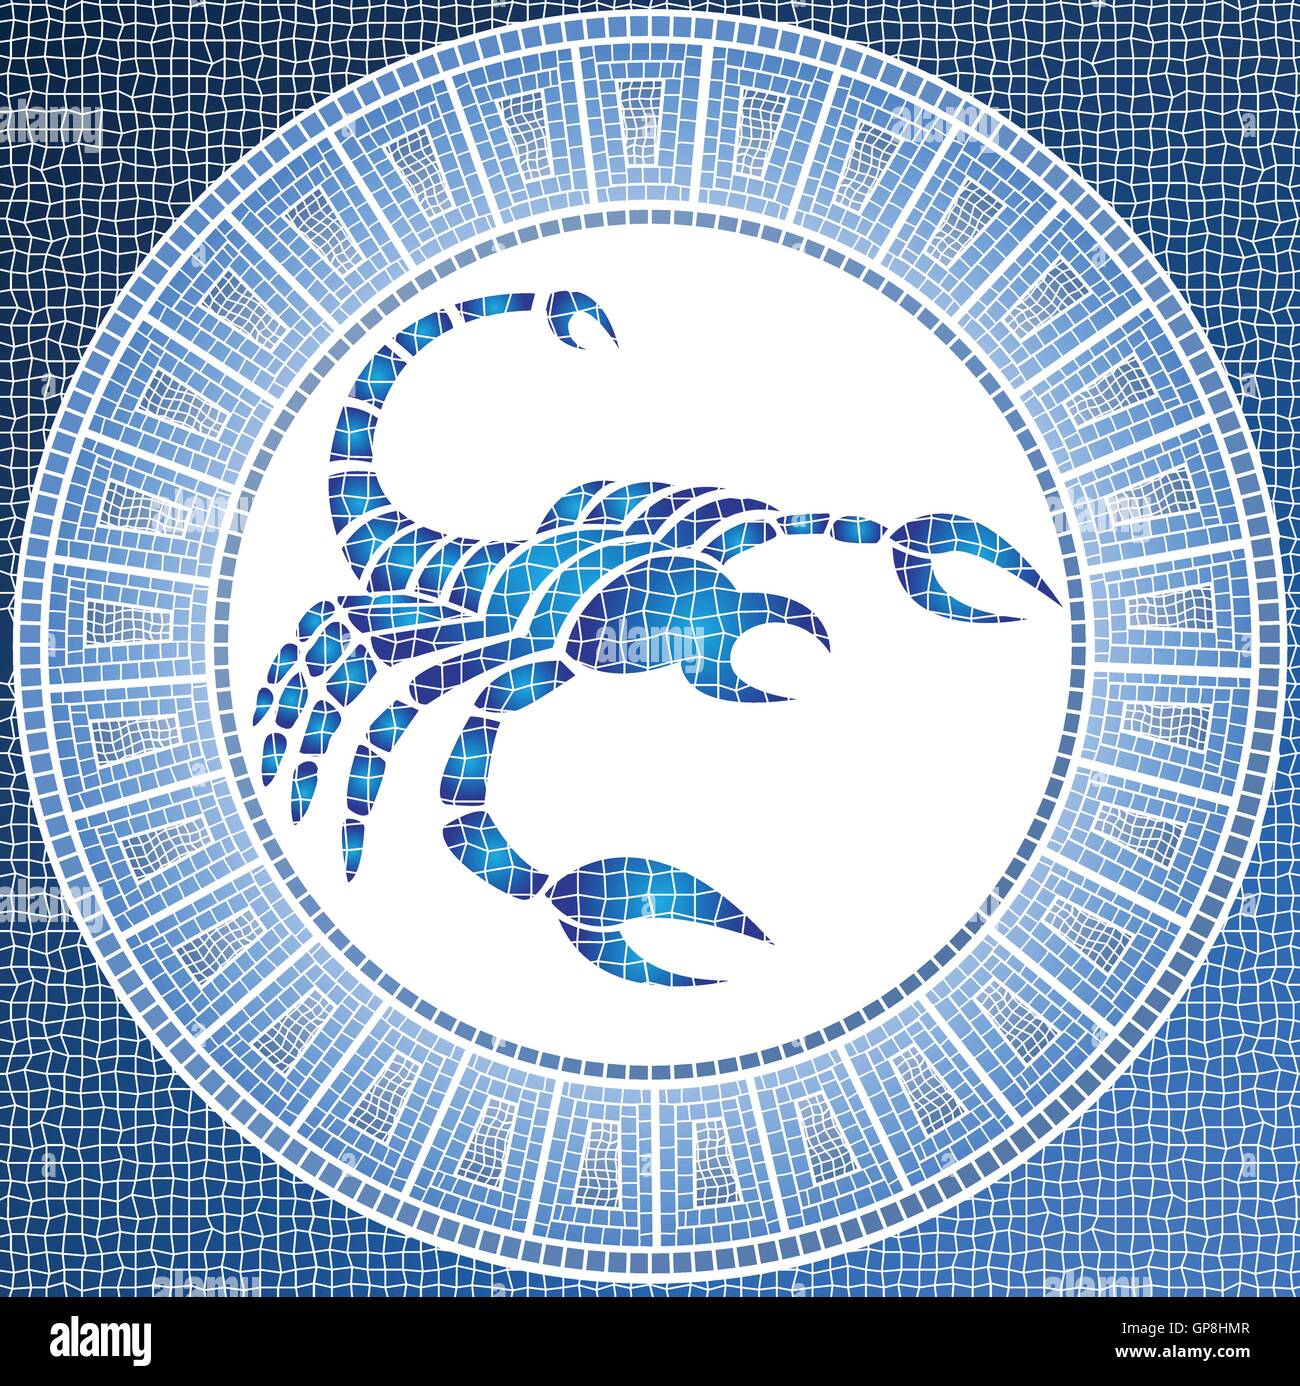 Scorpio fish Stock Vector Images - Alamy